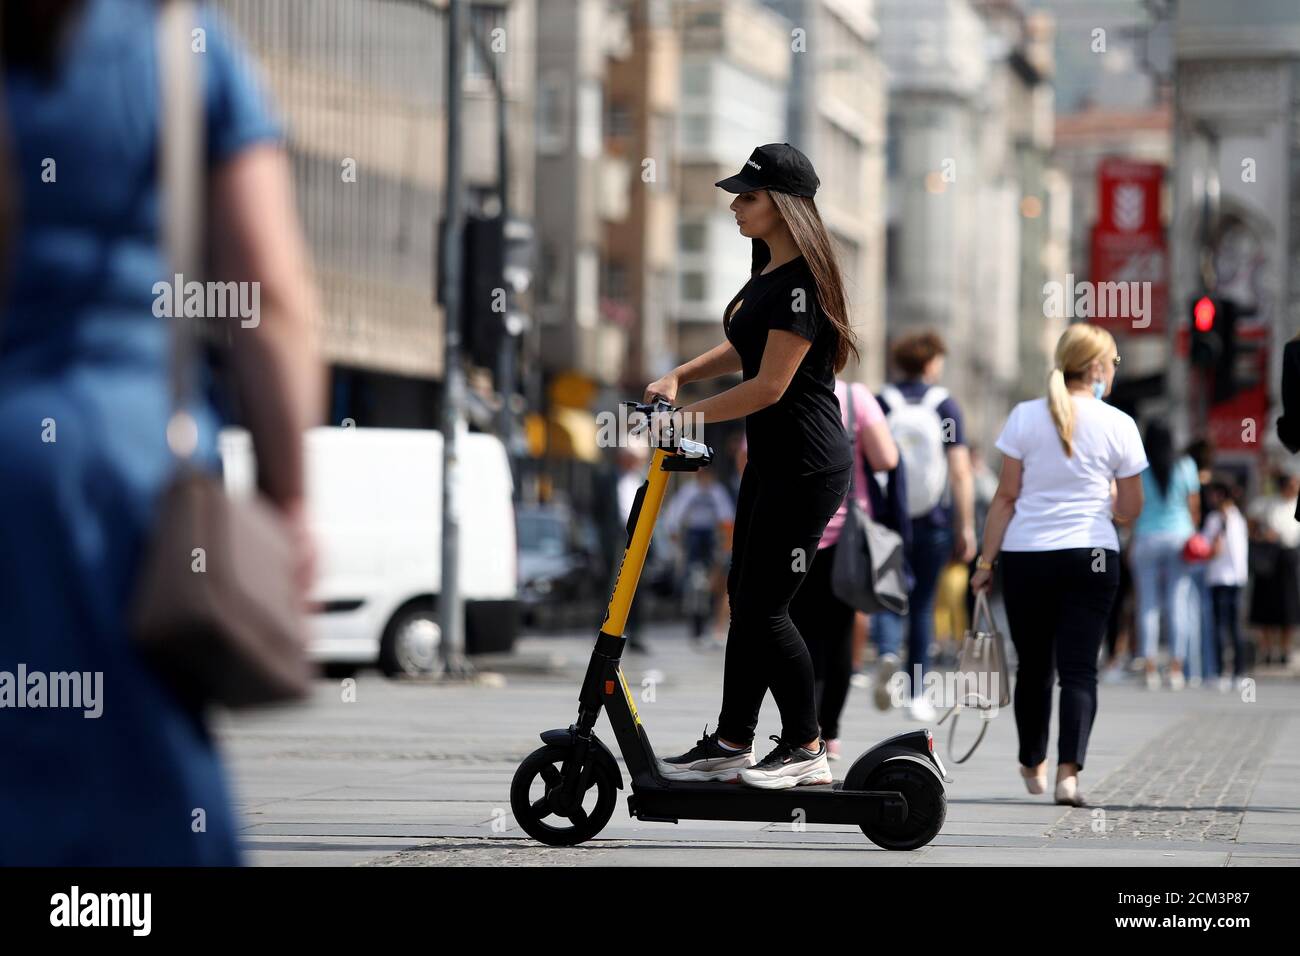 Sarajevo, Bosnia and Herzegovina (BiH). 16th Sep, 2020. A woman is seen on  an electric scooter in Sarajevo, Bosnia and Herzegovina (BiH), on Sept. 16,  2020. A new way to move around